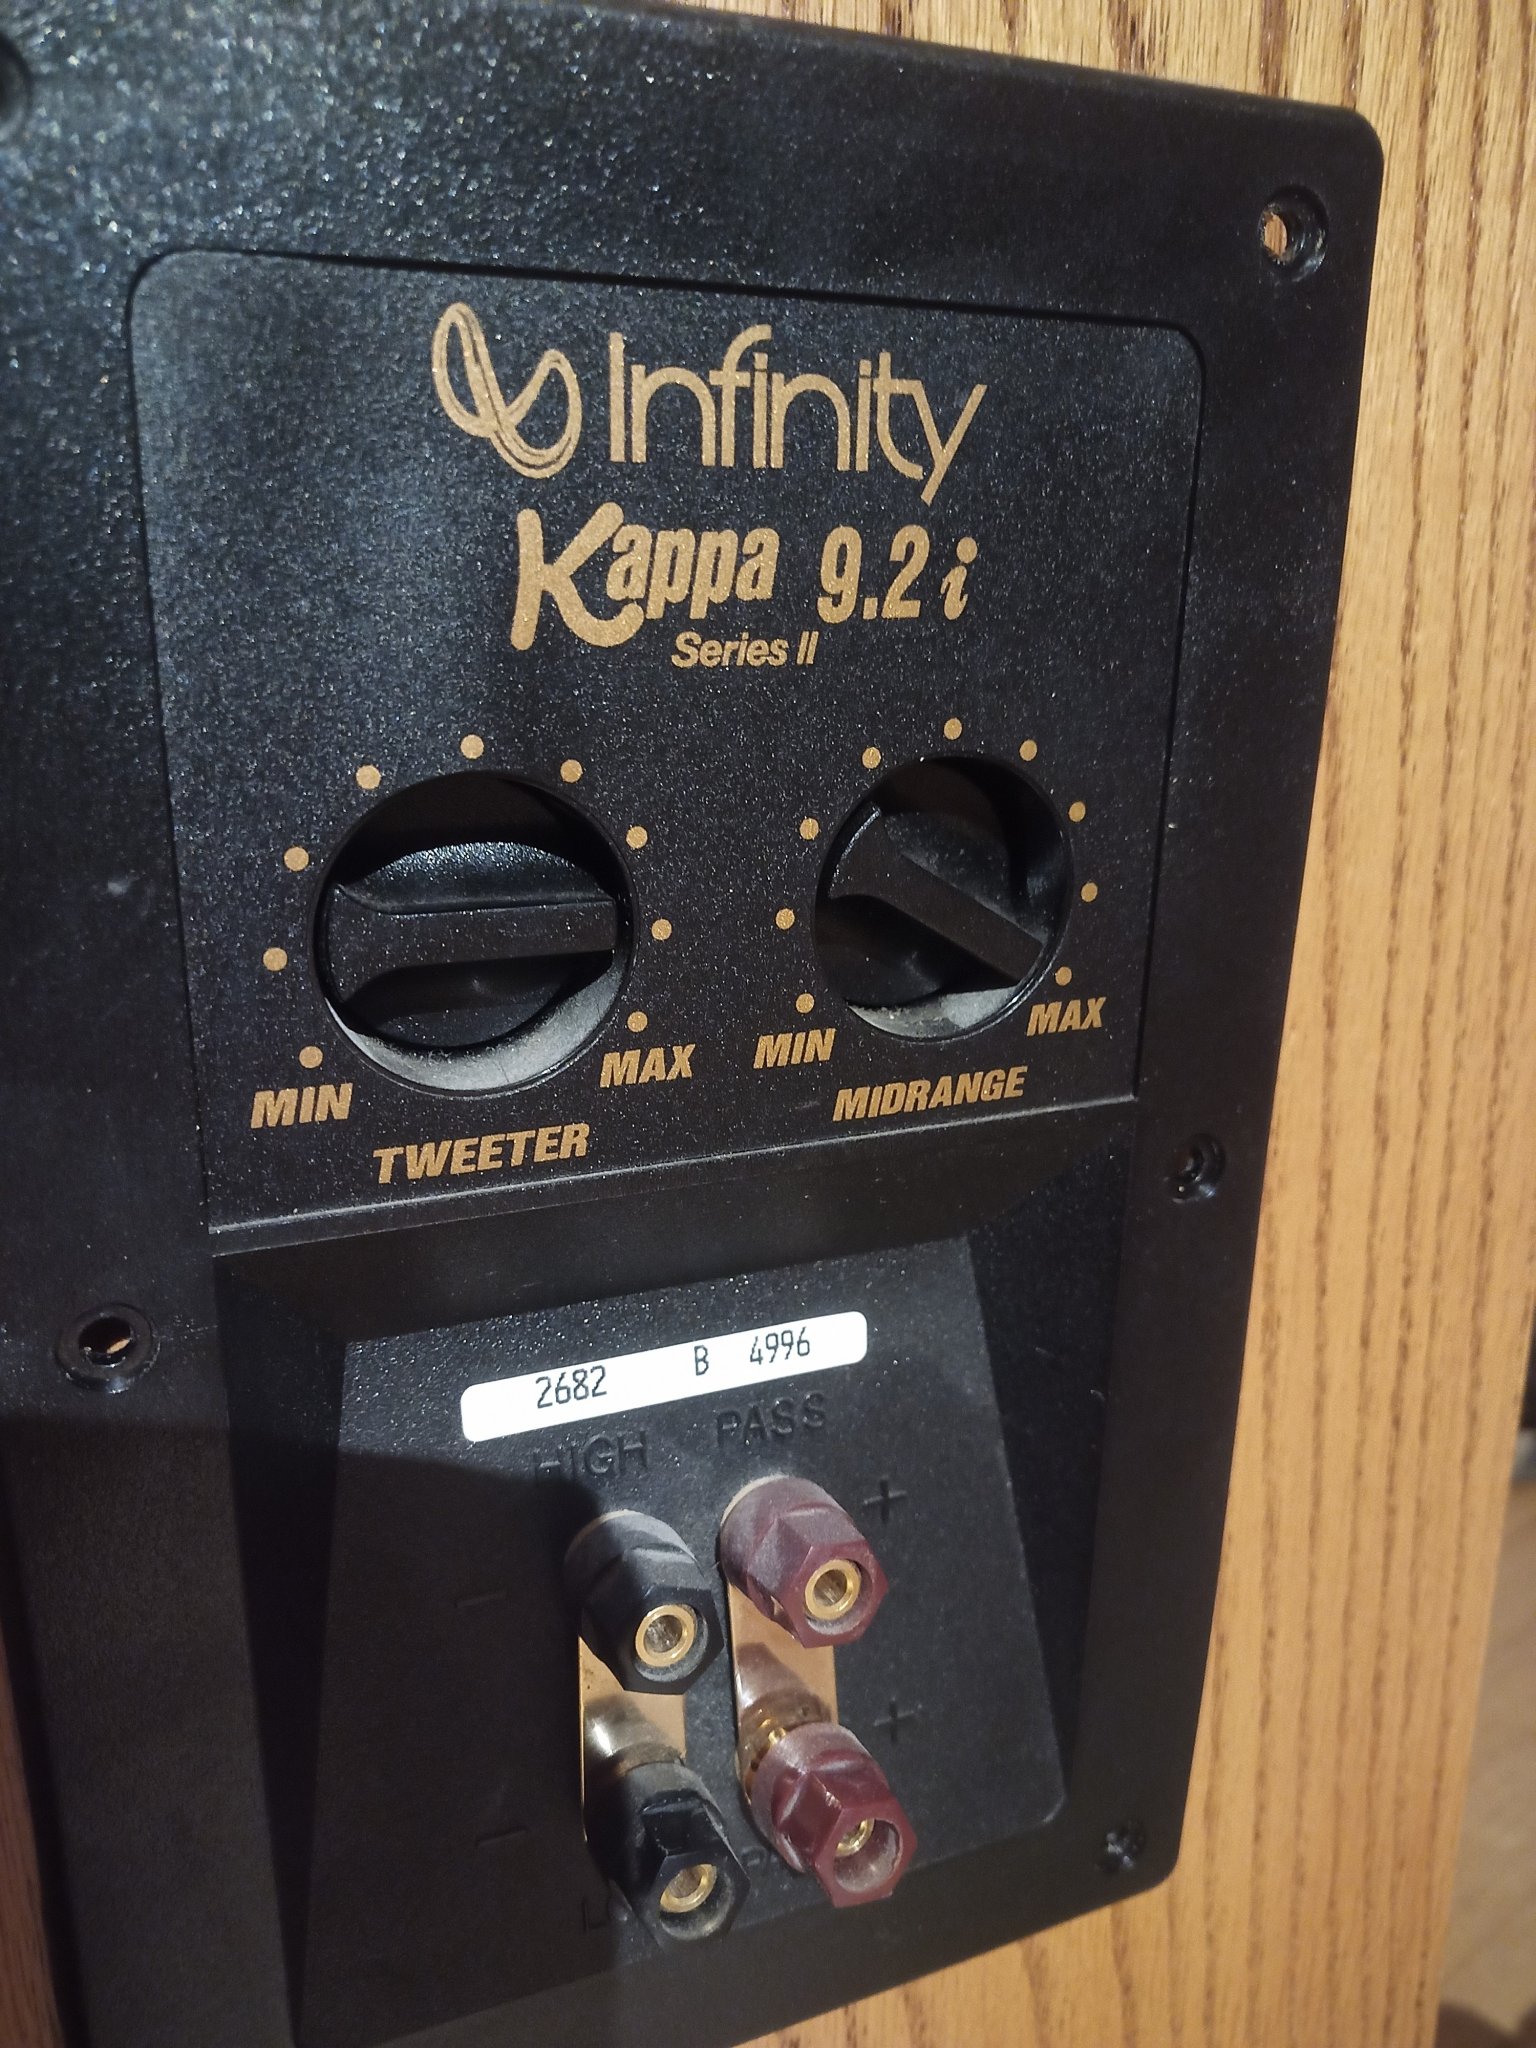 On upgrading Infinity Kappa's 9.2i | diyAudio